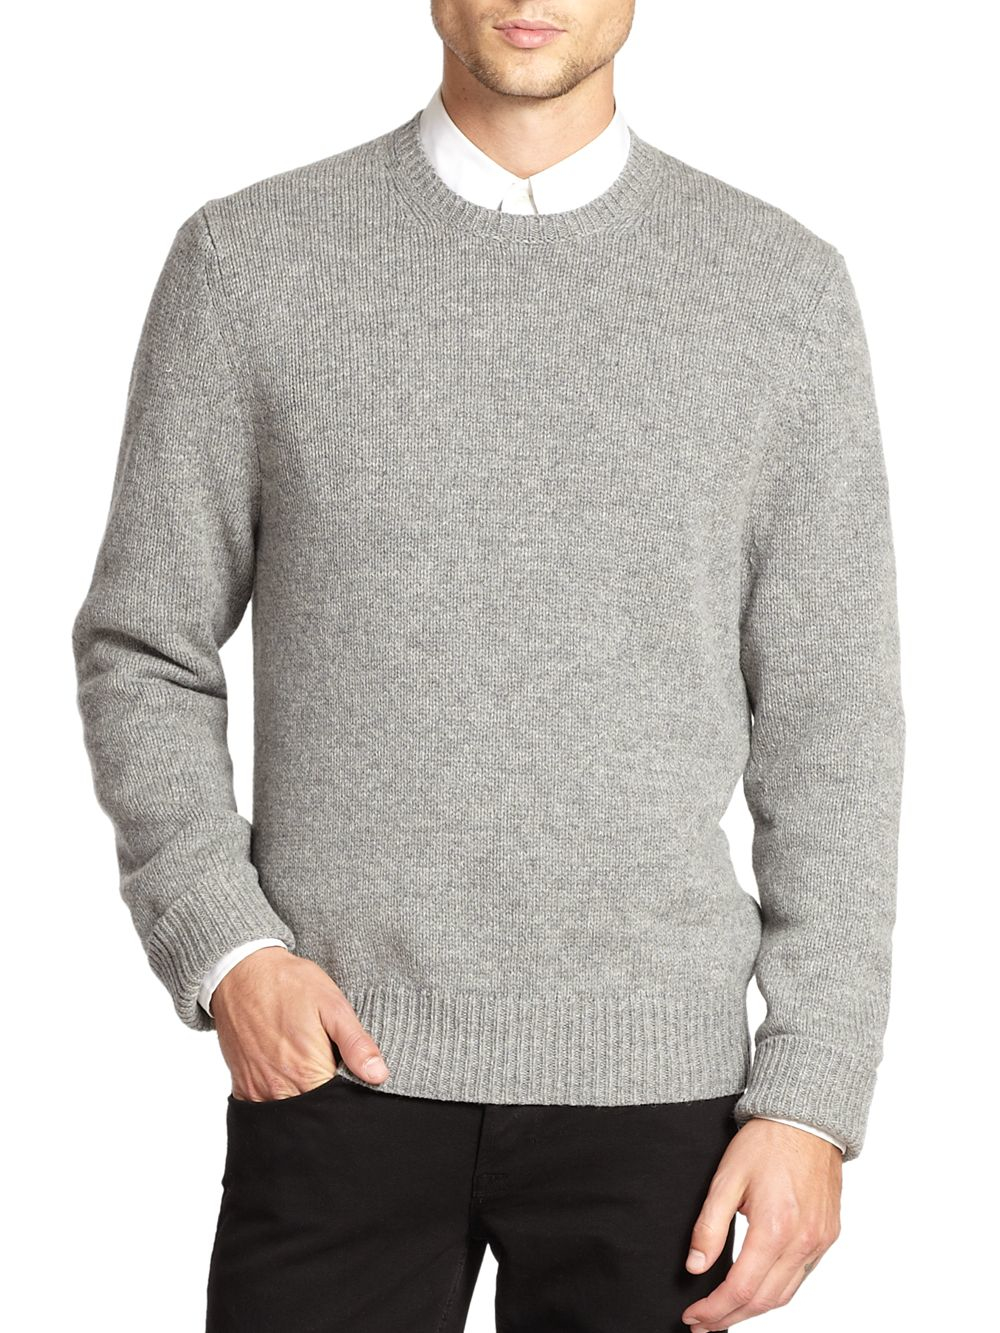 Lyst - Acne Studios Crewneck Sweater in Gray for Men